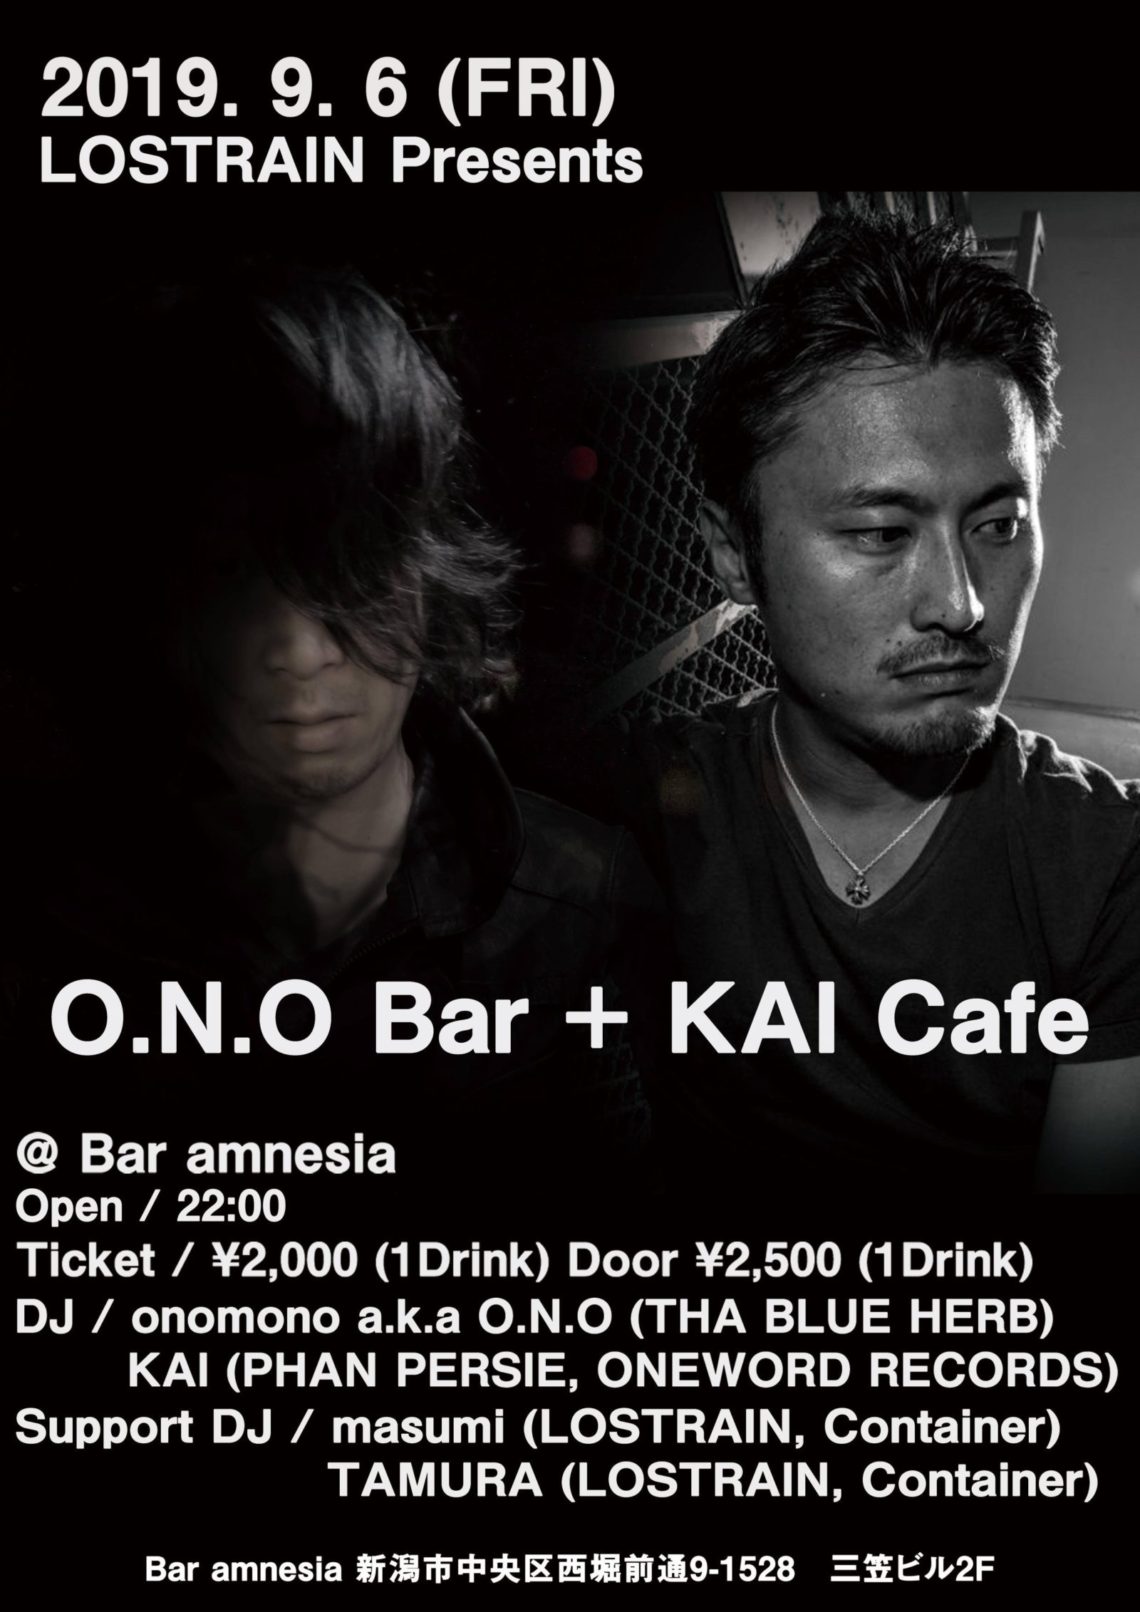 2019. 9. 6 FRI – KAI : DJ@Bar amnesia / LOSTRAIN Presents onobar + kaicafe